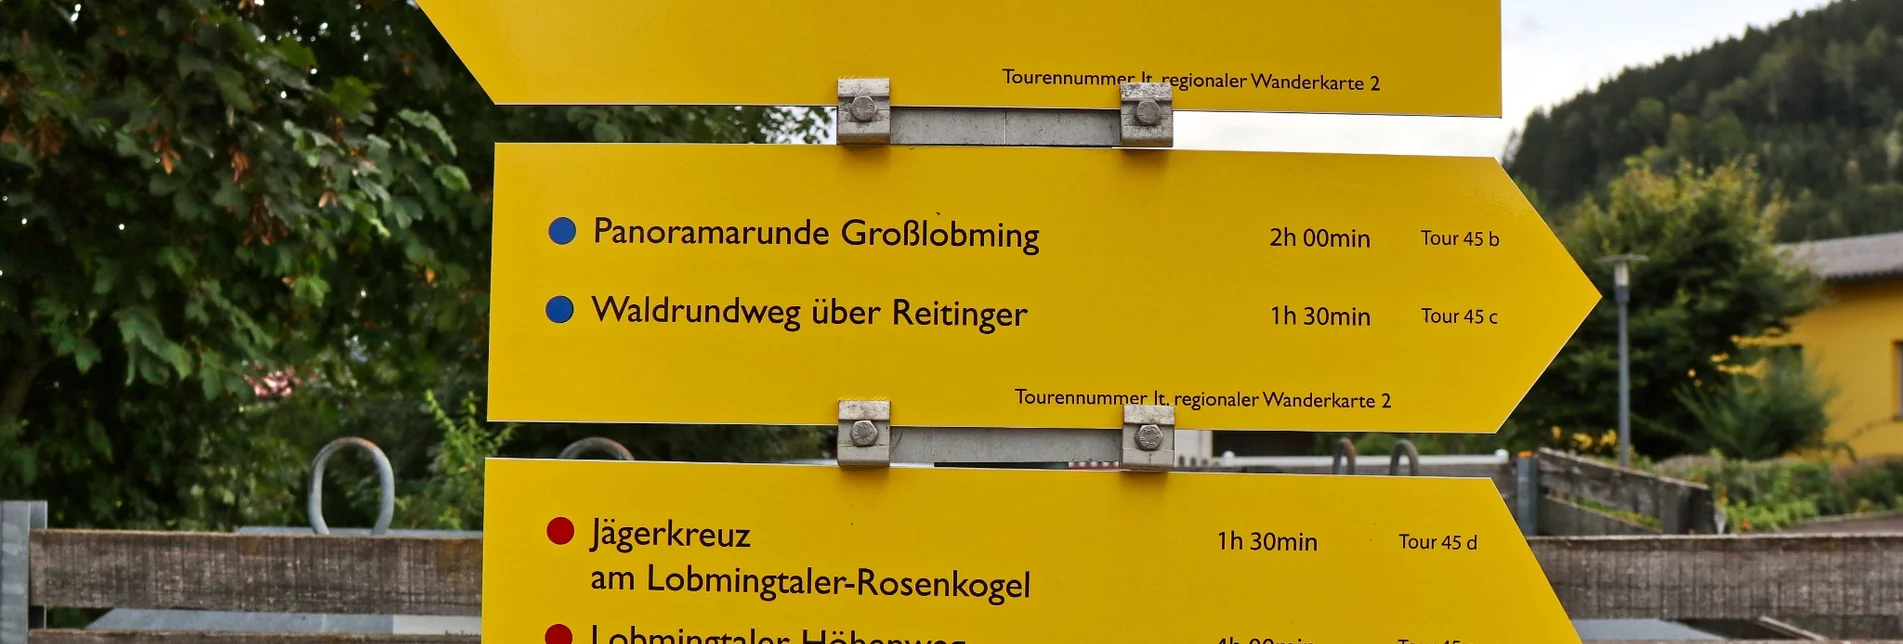 Wanderung Jägerkreuz am Lobmingtaler-Rosenkogel - Touren-Impression #1 | © WEGES OG